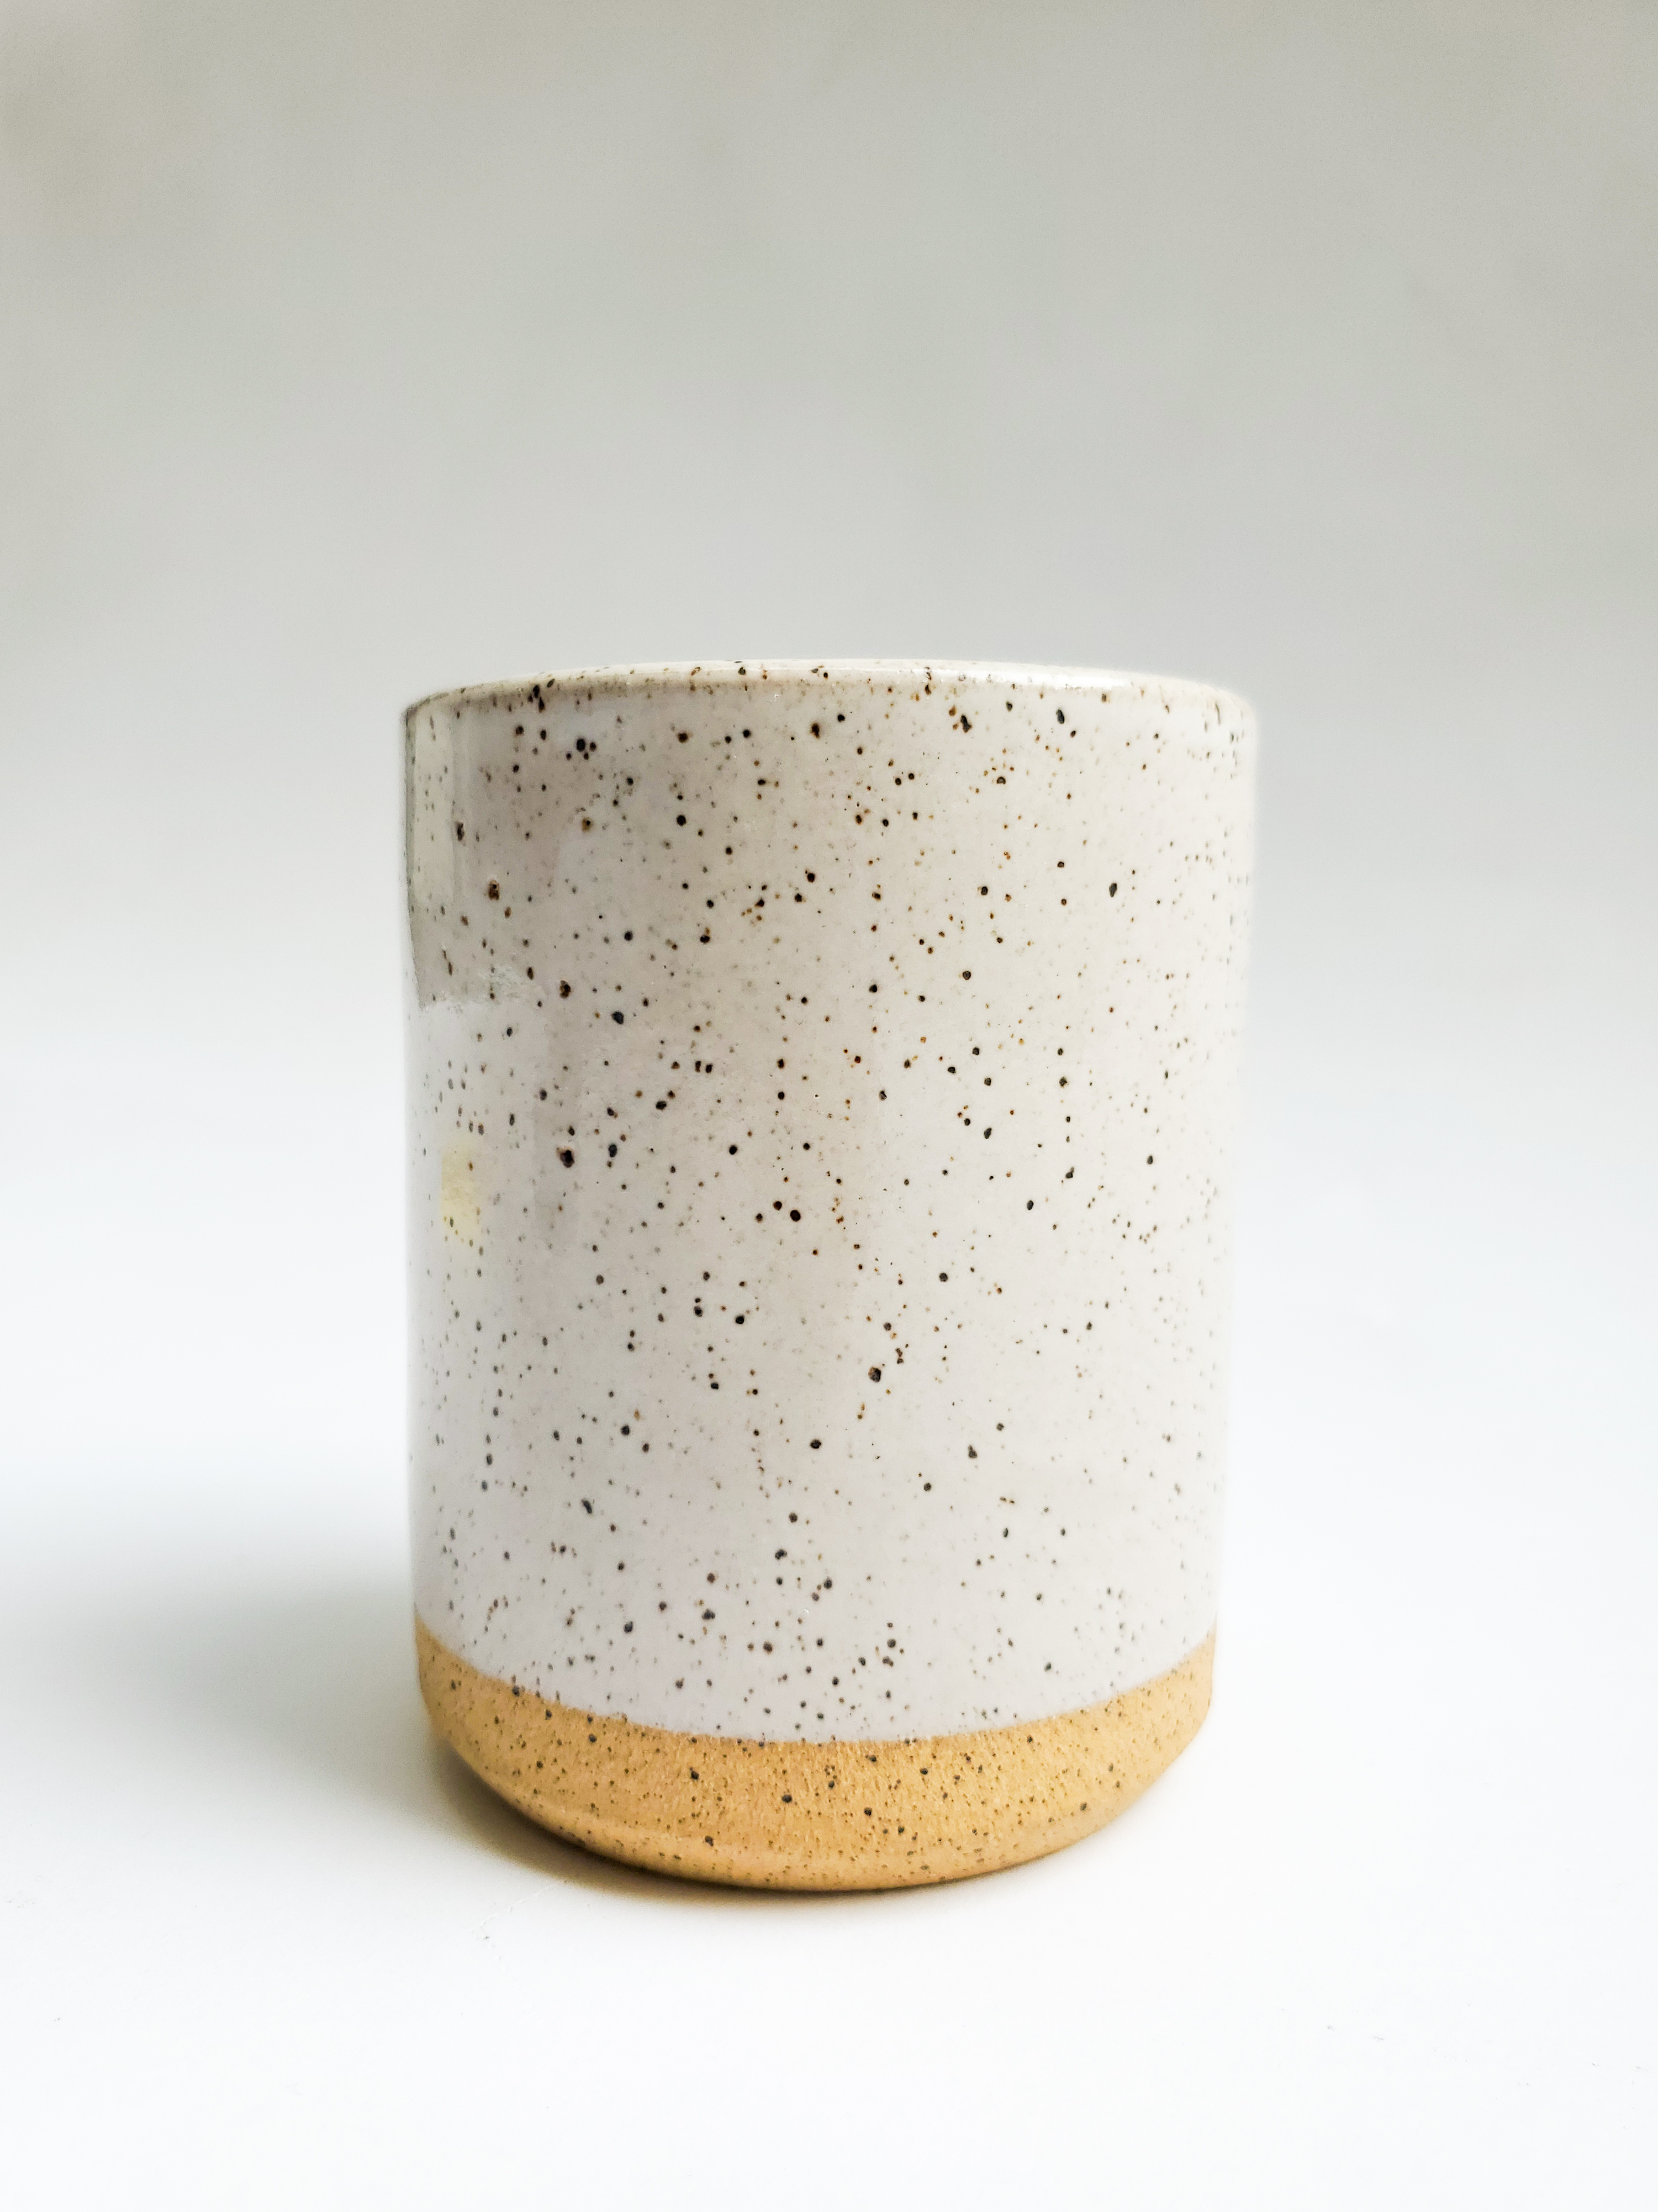 Glazed, grey, ceramic cup with black speckles. 